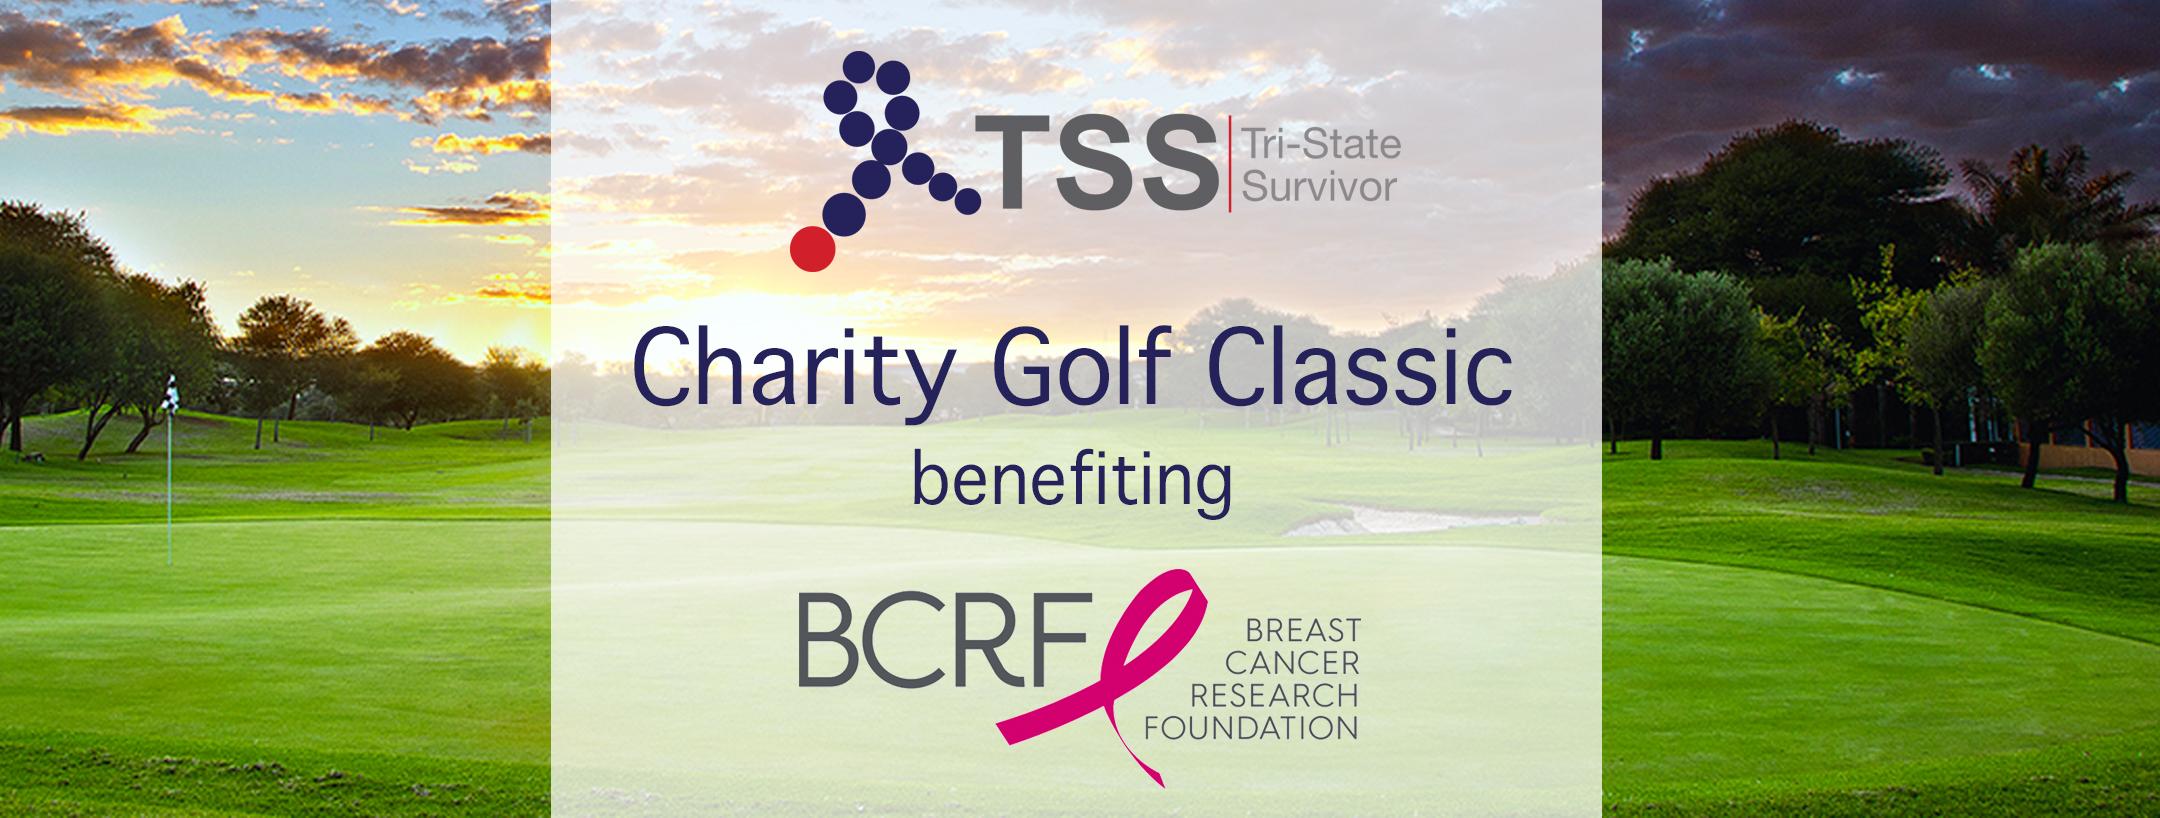 Tri-State Survivor Charity Golf Classic